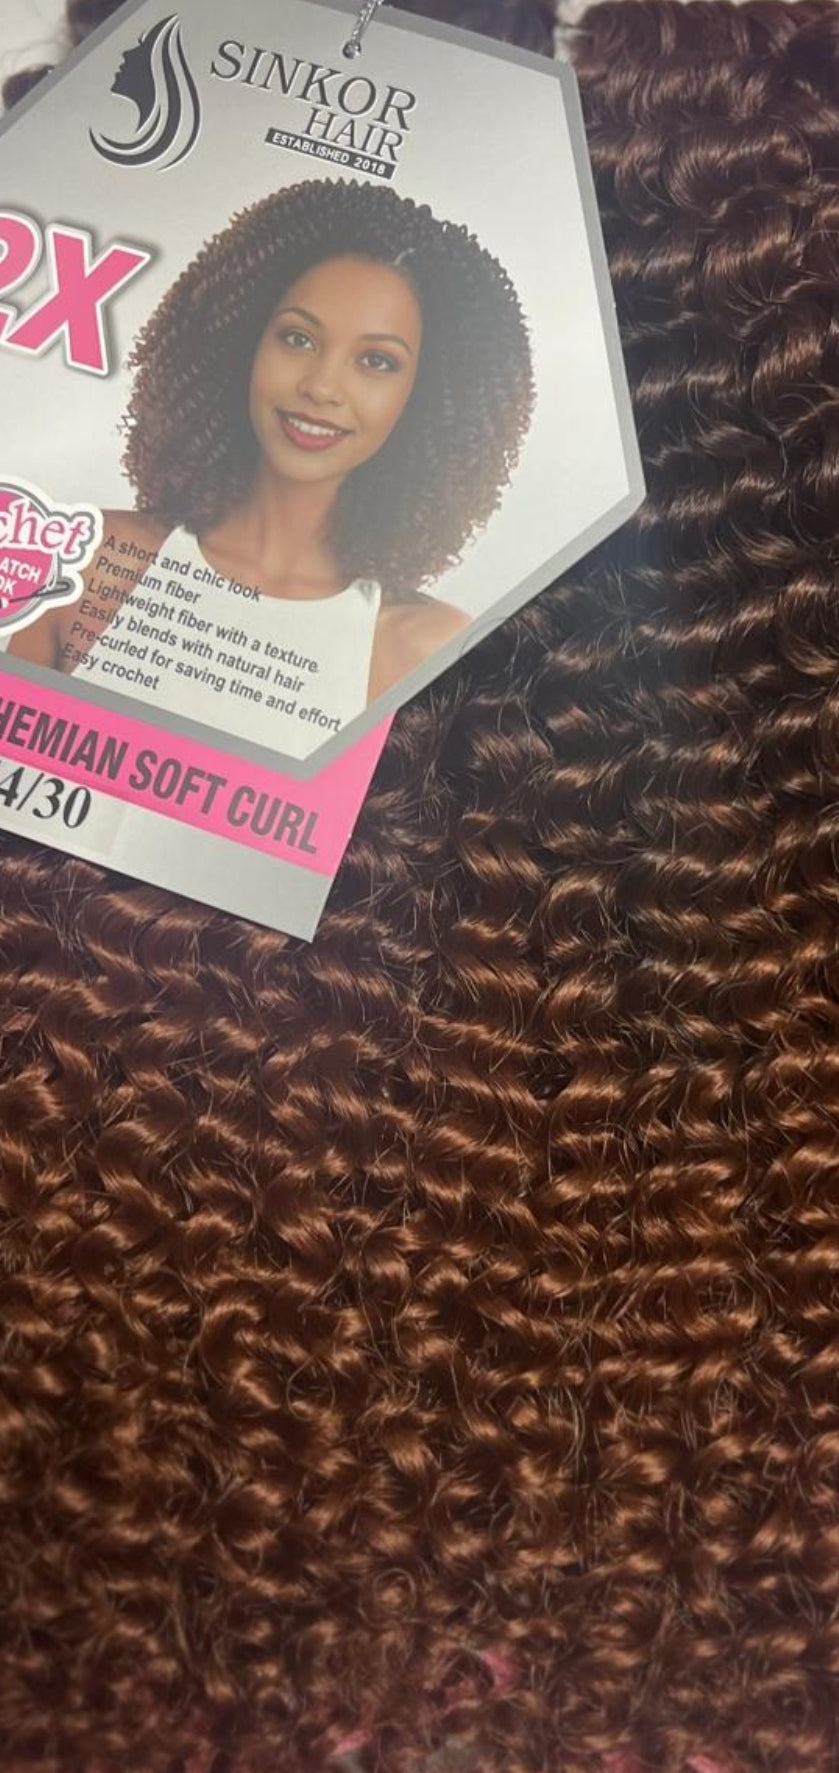 Bohemian soft curl